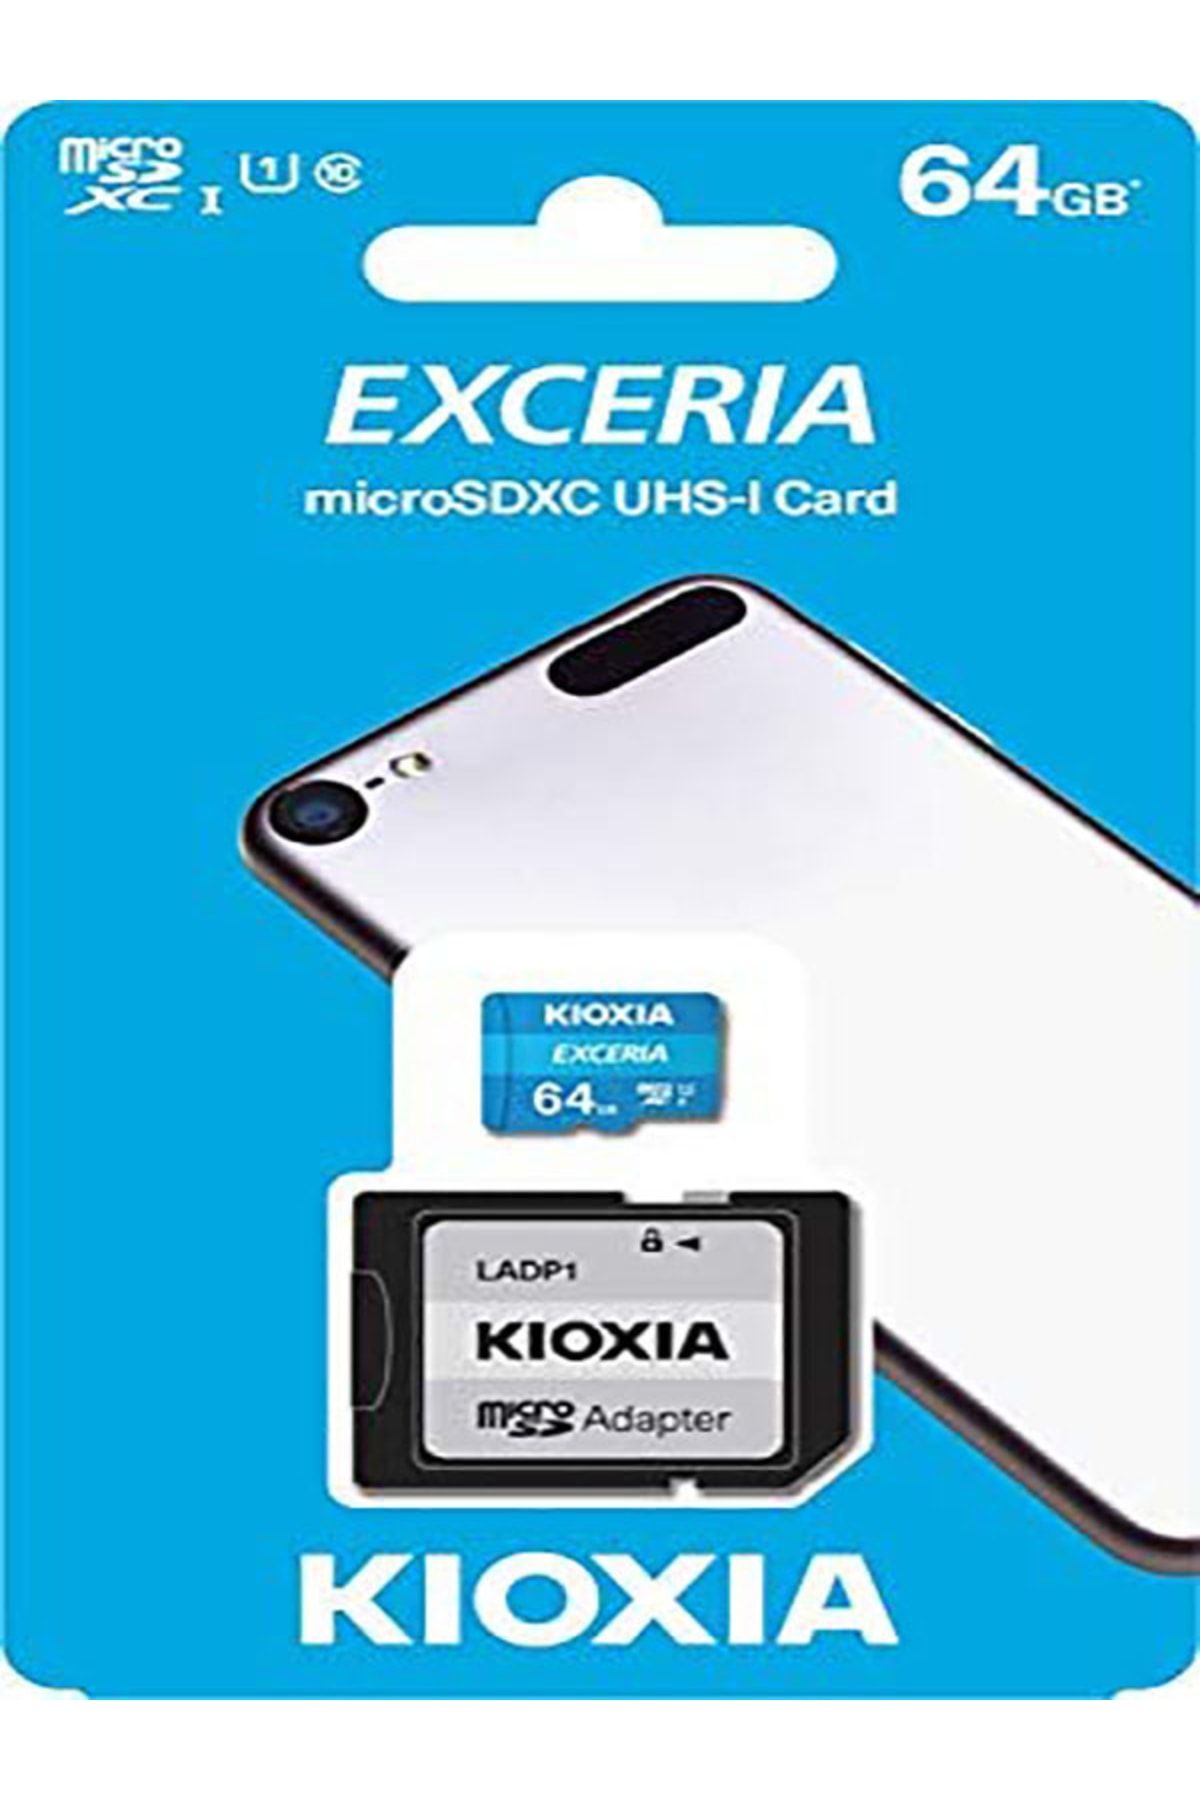 Kioxia Excerıa Microsd 64 Gb Hafıza Kartı, Kamera Için Uygun Olan